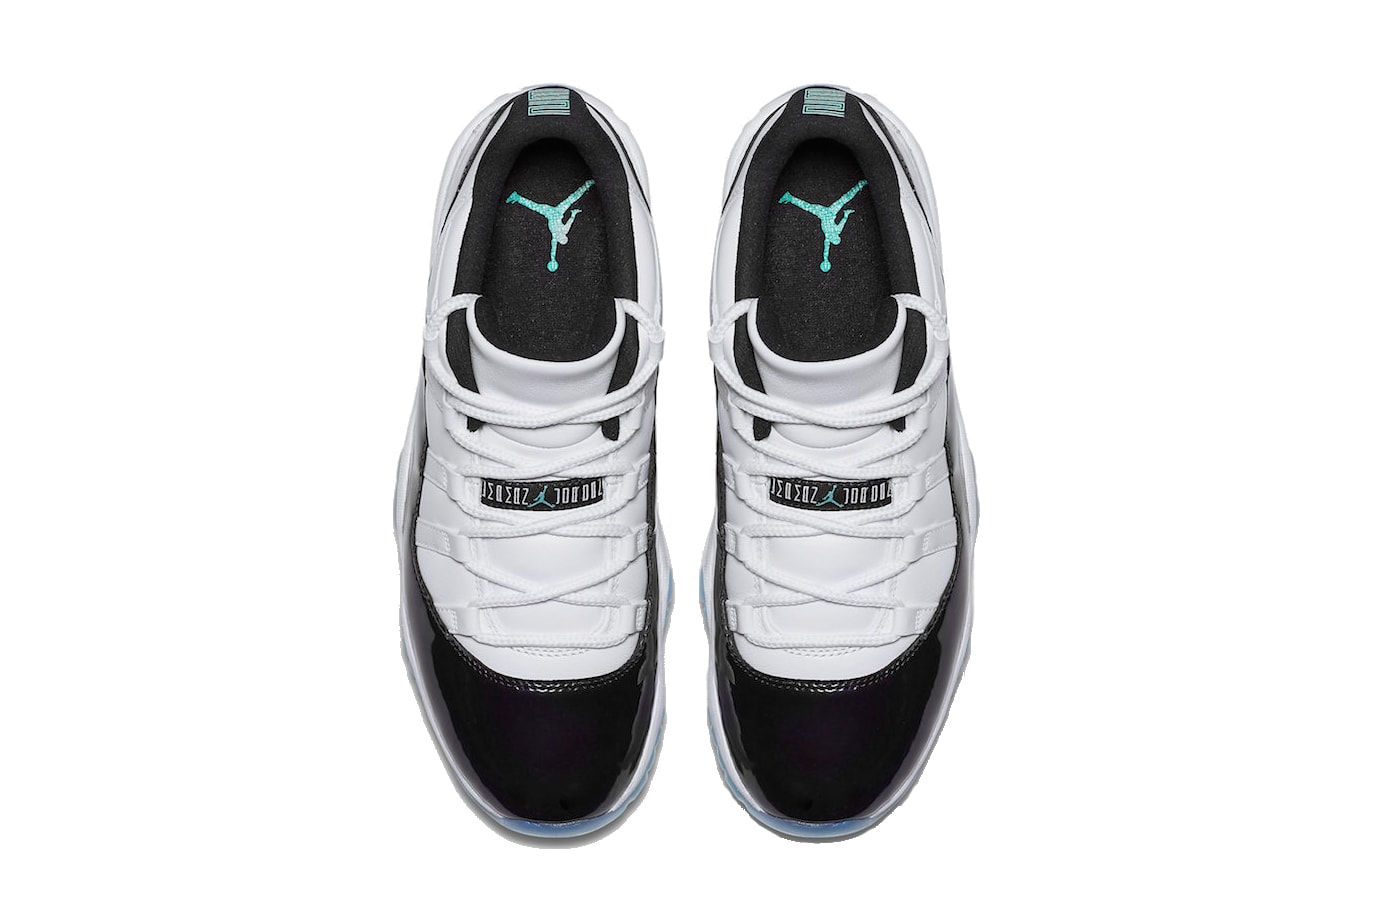 Air Jordan brand 11 retro Low Easter Emerald Green Release date information white black sneakers michael